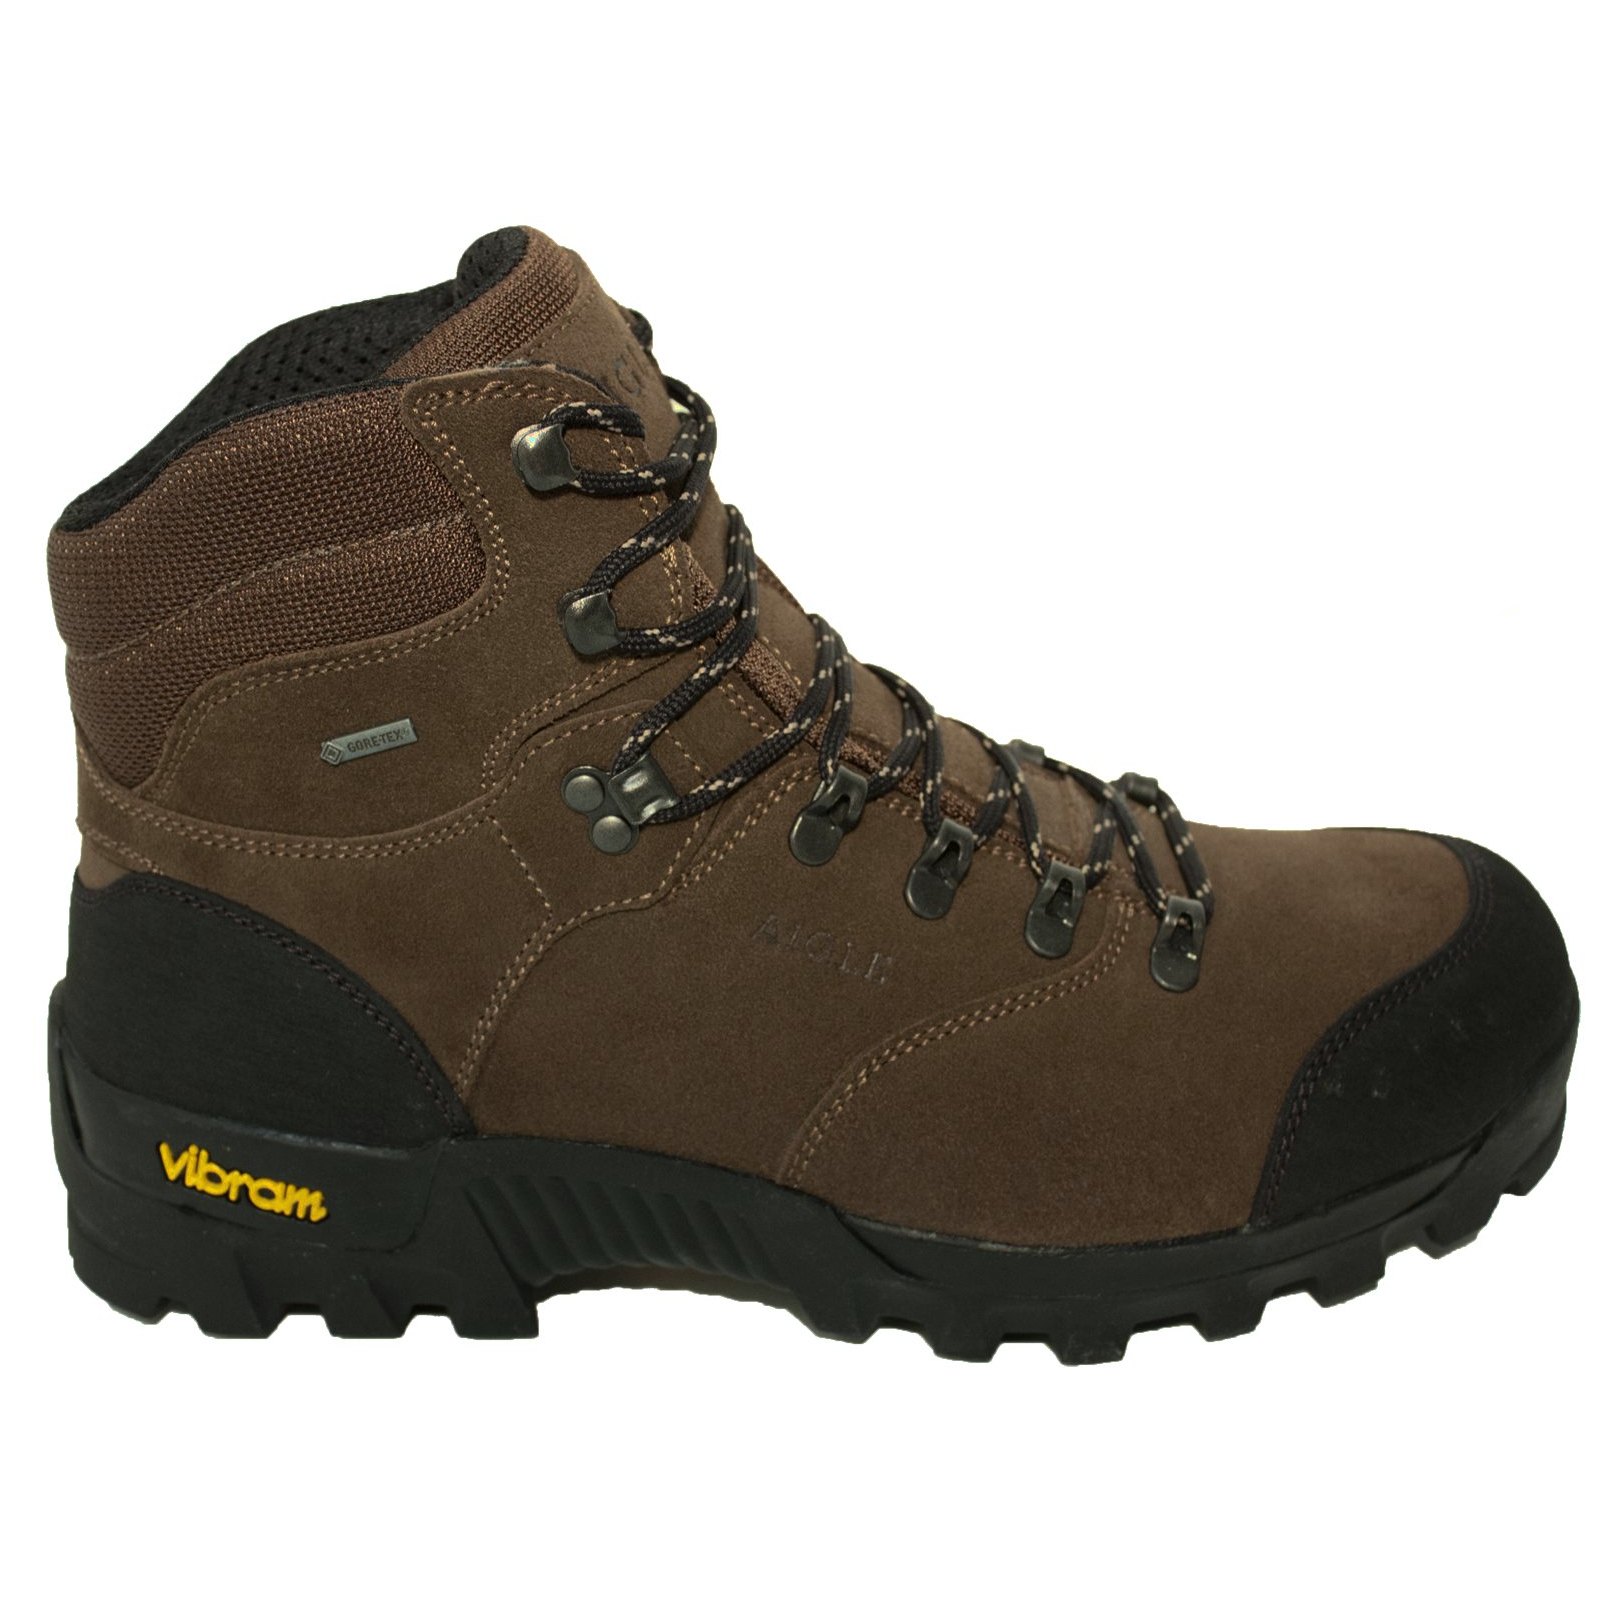 AIGLE Altavio Waterproof Hiking Boots - UK Size 5.5-6 (EU 39) - official Aigle stockist